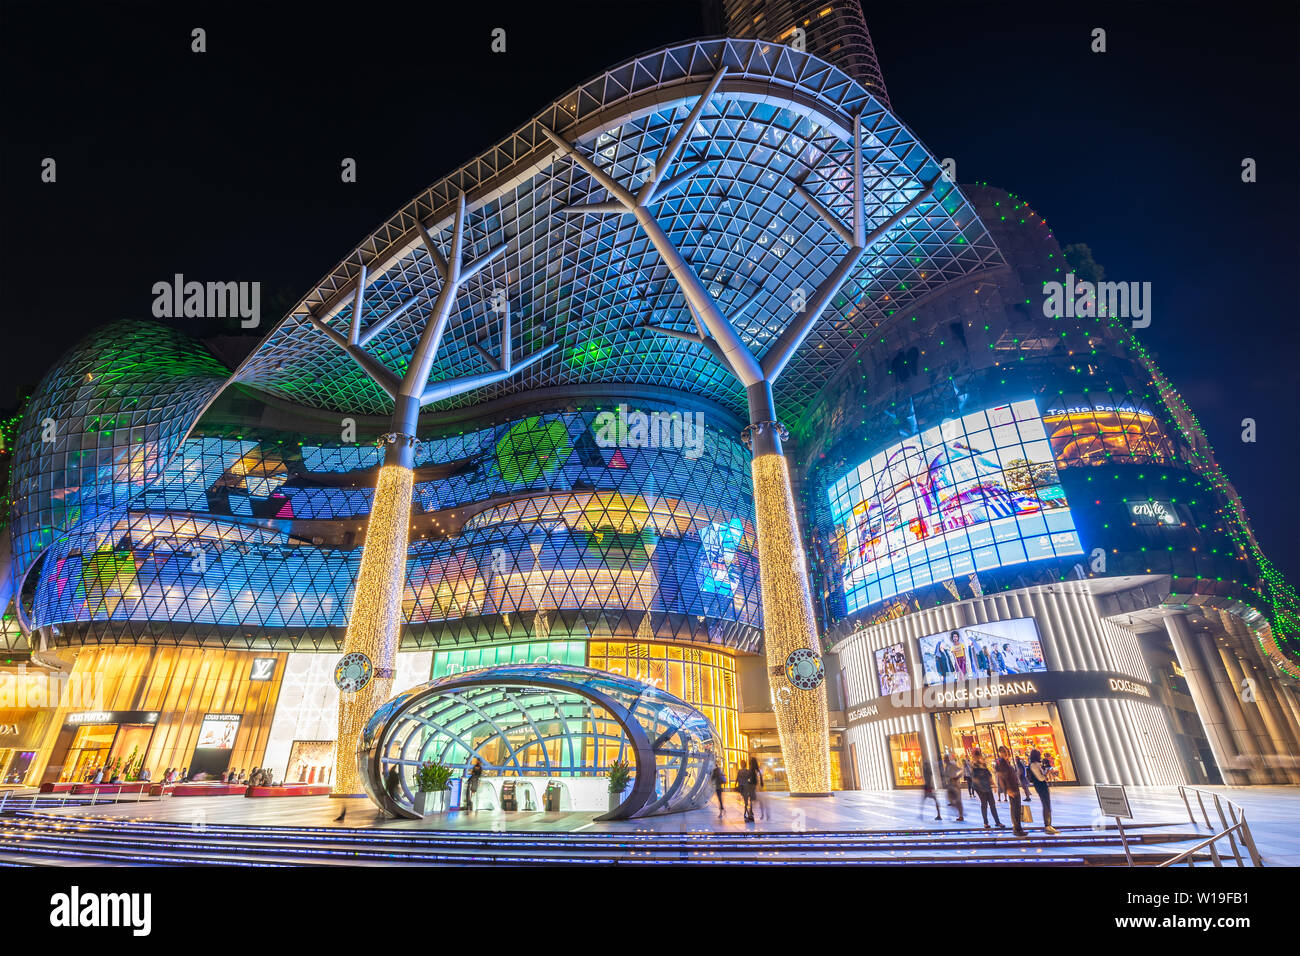 ORCHARD Road, Singapur - Januar 6, 2019: Singapur Night City Skyline bei ION Orchard Einkaufszentrum Stockfoto